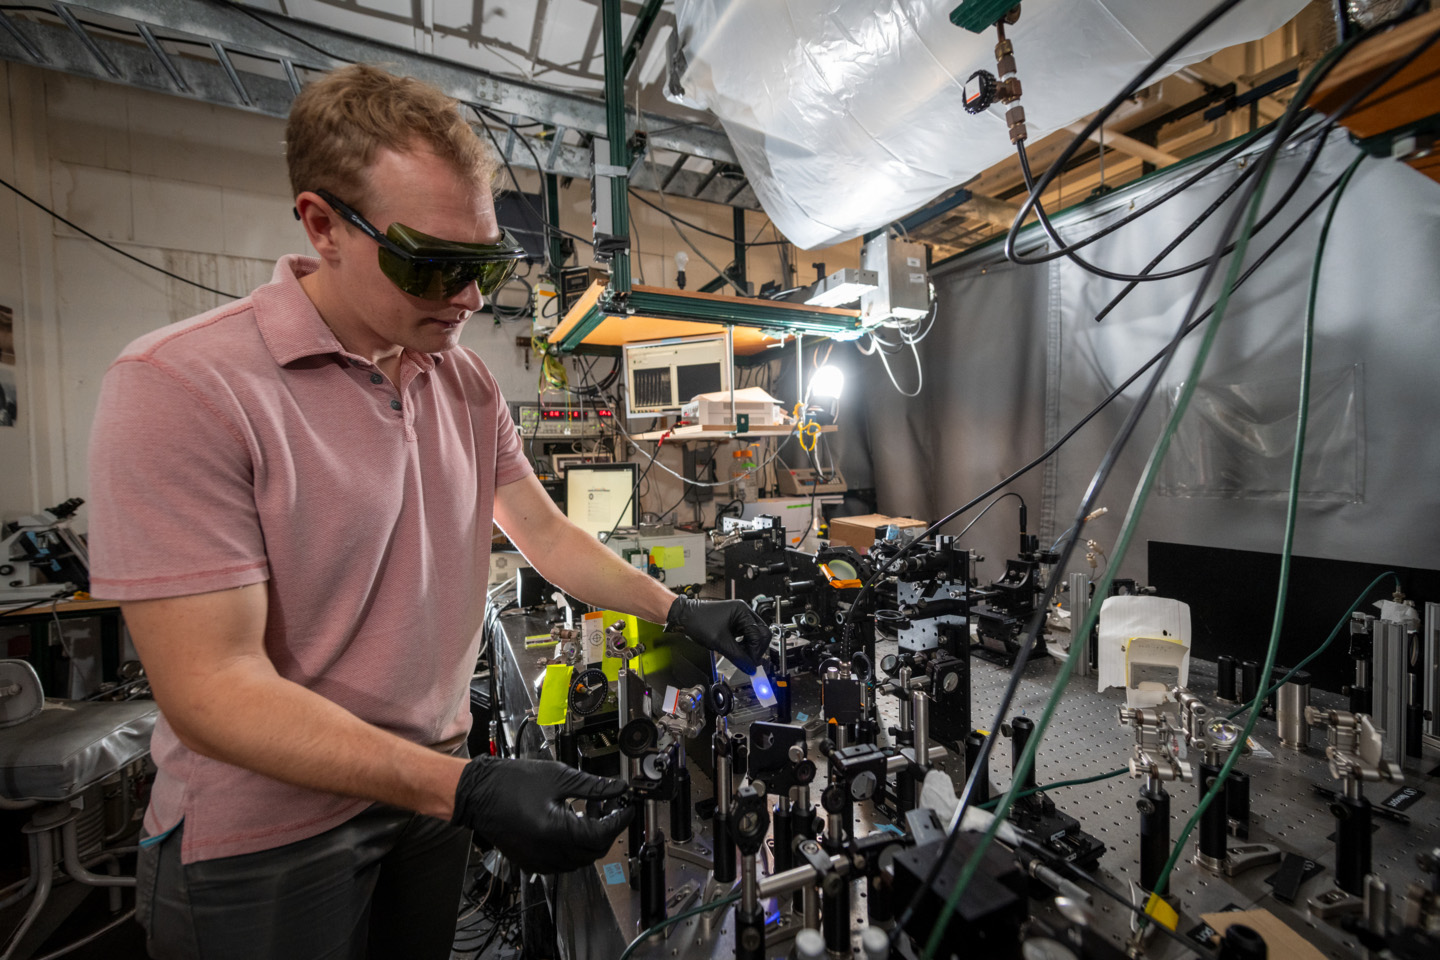 Shane Devlin makes adjustments to the deep UV second harmonic generation spectroscopy device at UC Berkeley.